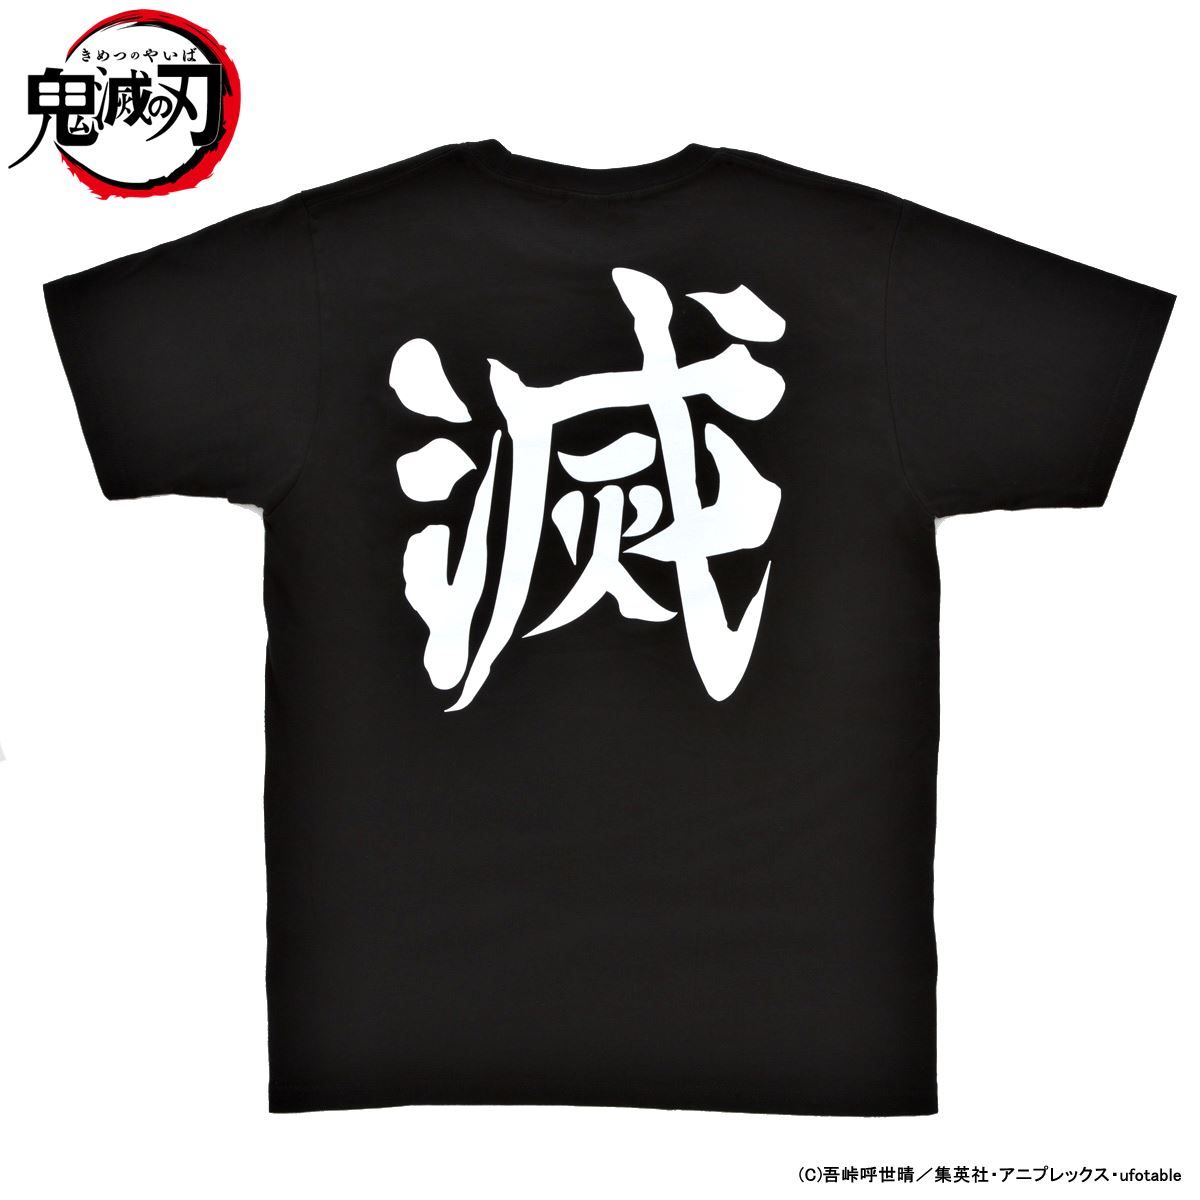 Demon Slayer: Kimetsu no Yaiba T-shirt [March 2021 Delivery]